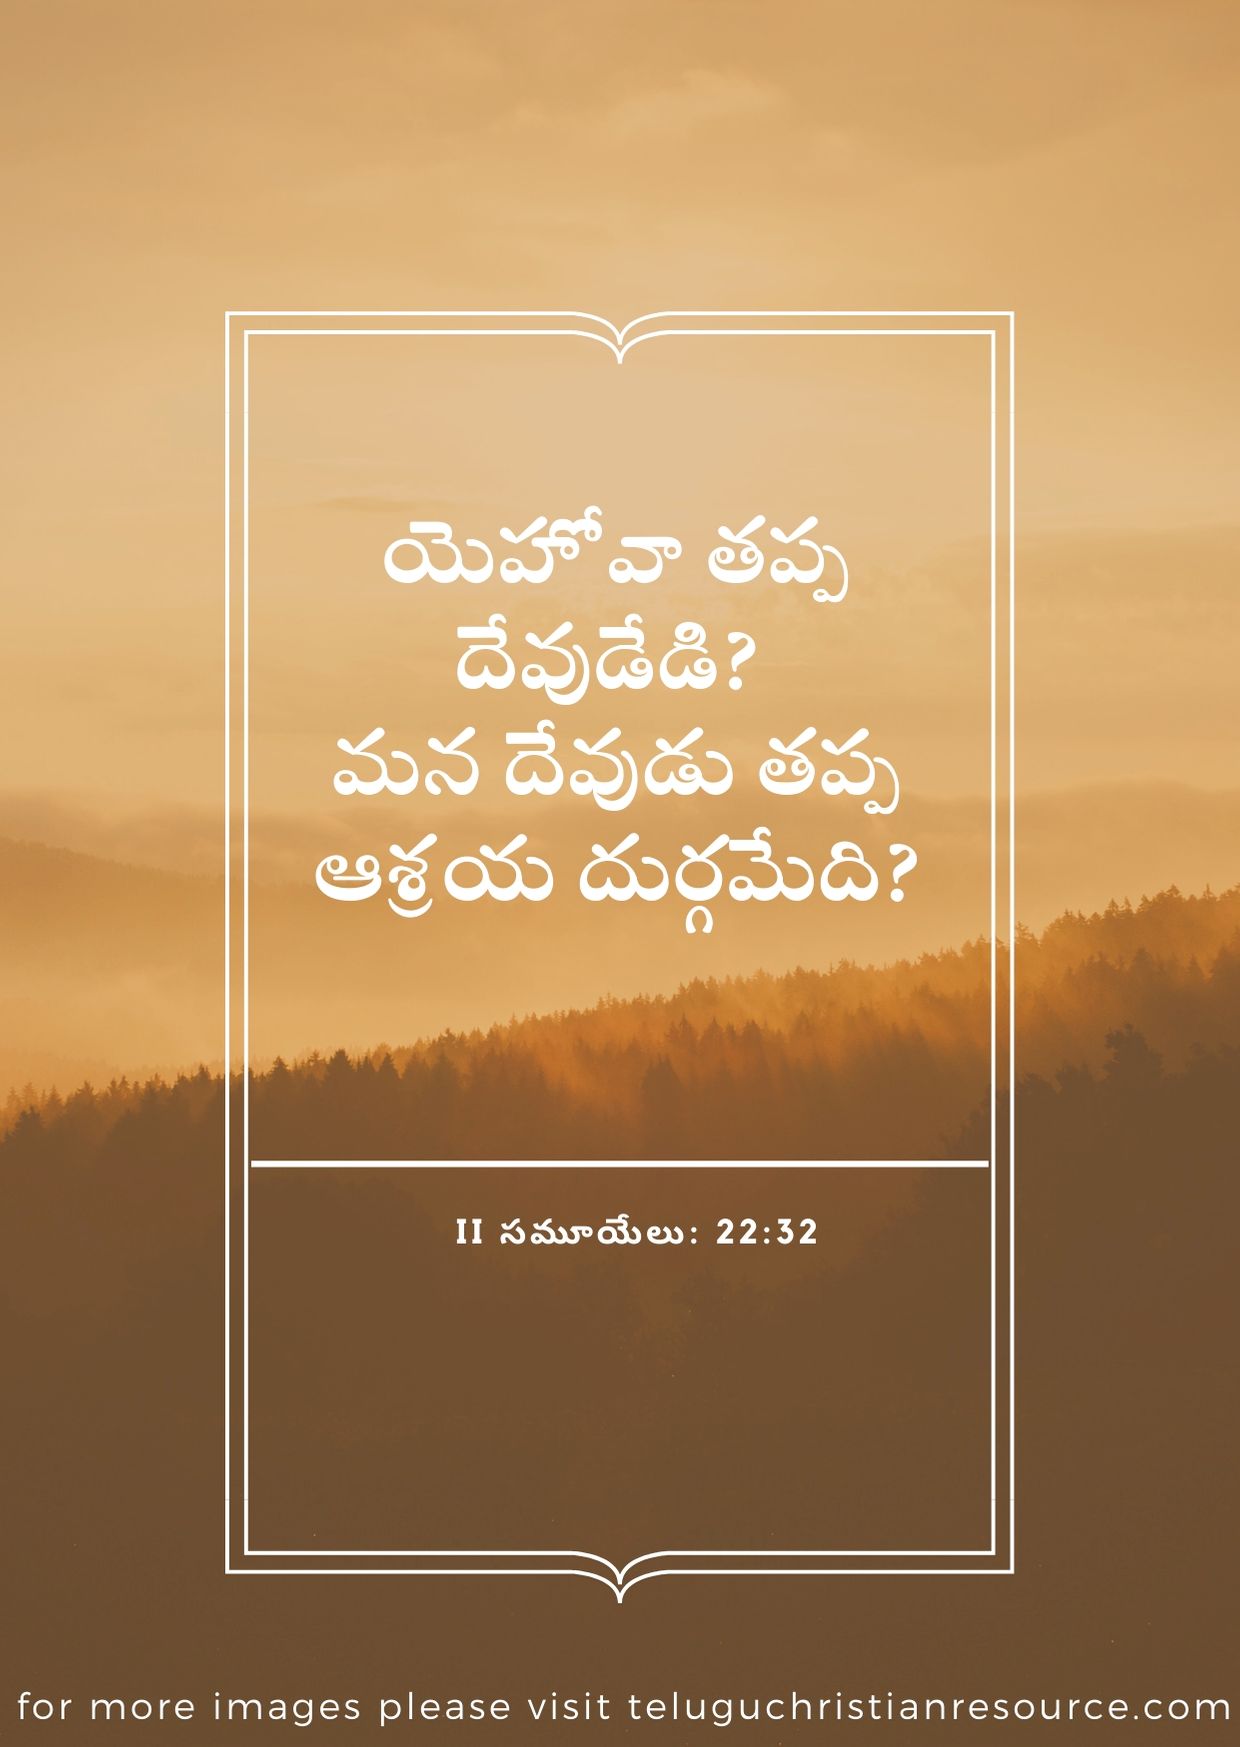 Telugu Bible Verse Wallpapers/Smartphones - telugu Christian Resource